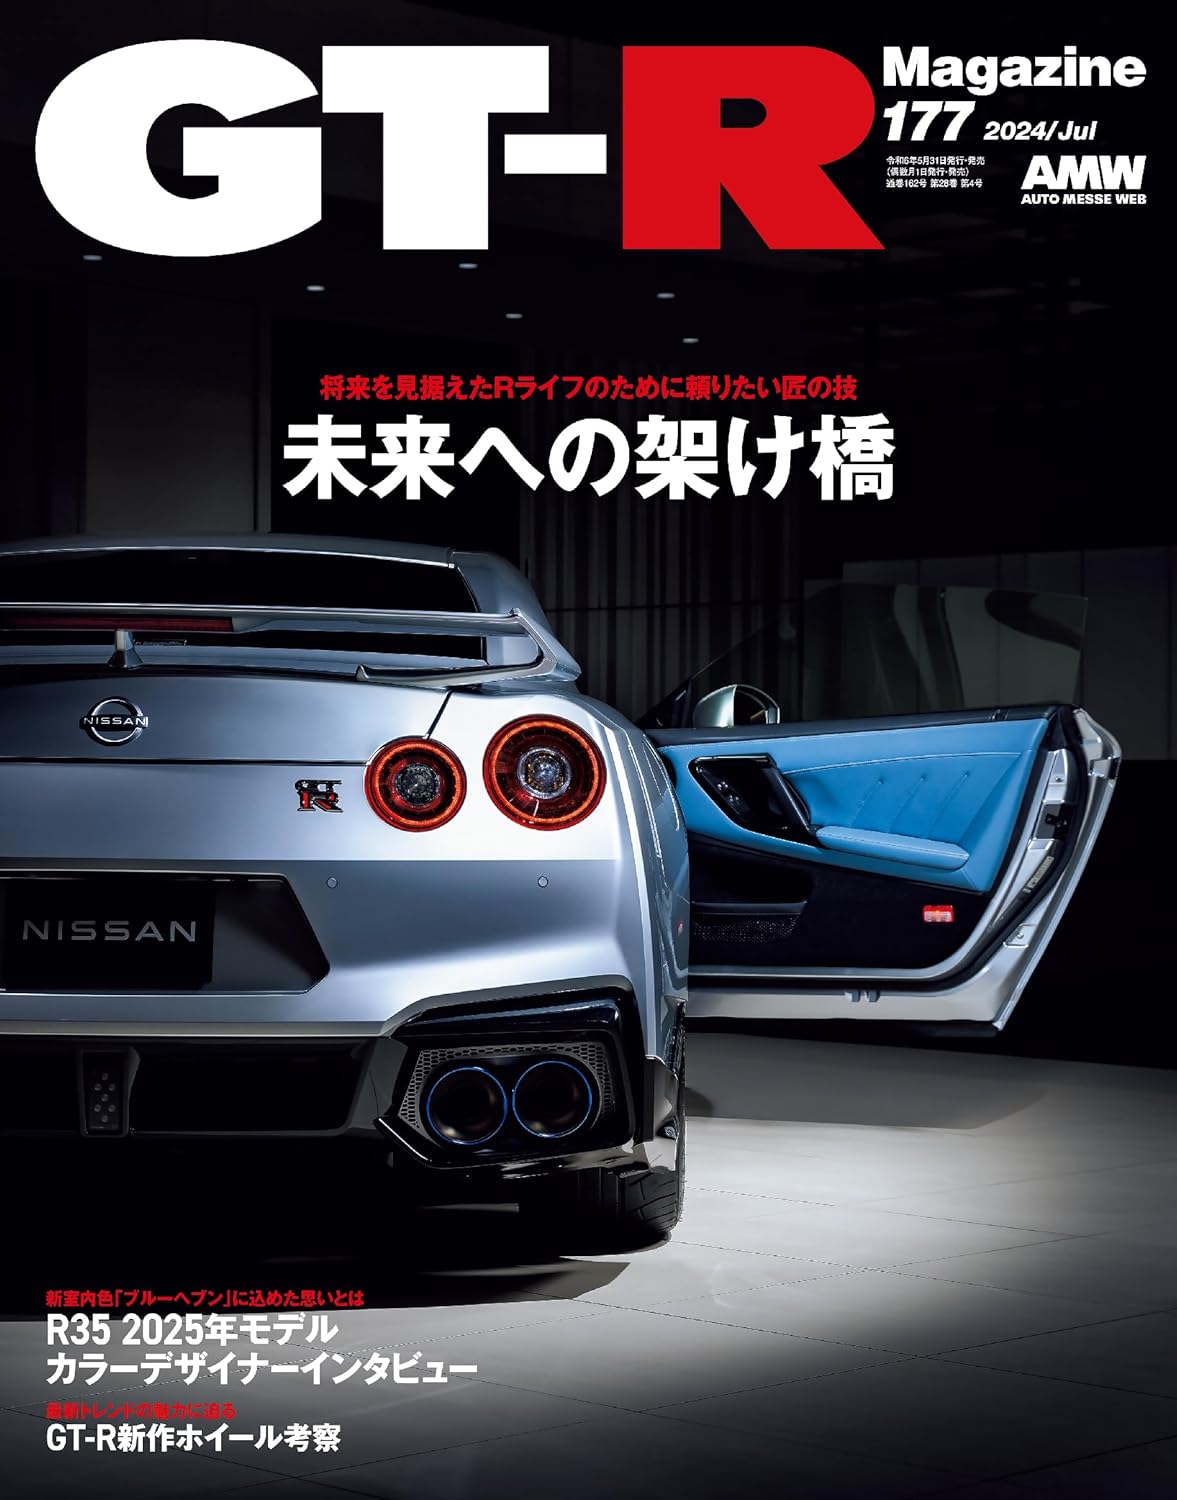 GT-R MAGAZINE 177 July 2024